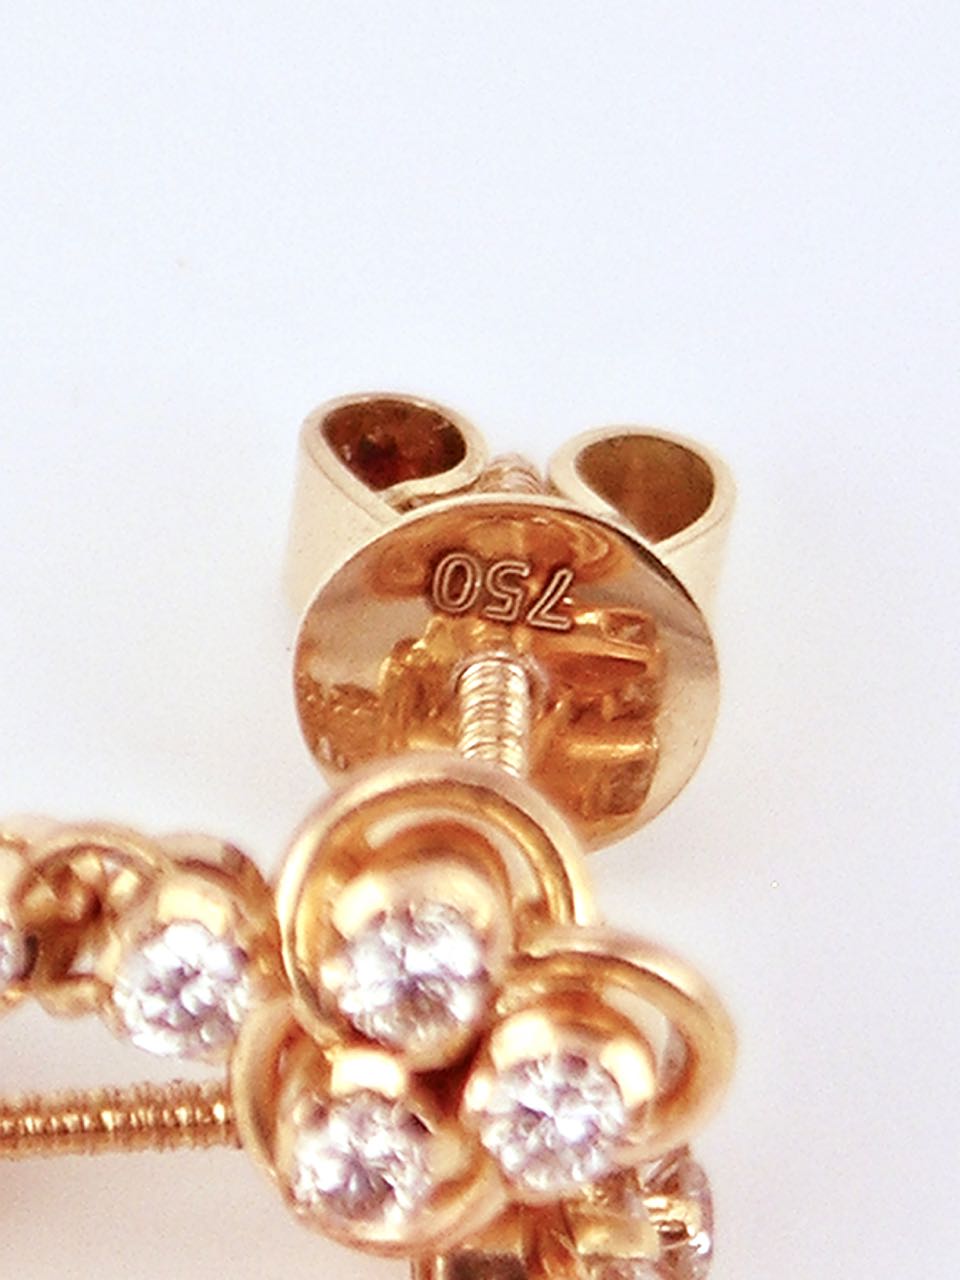 Vintage 18k Gold Diamond Cluster Drop Earrings